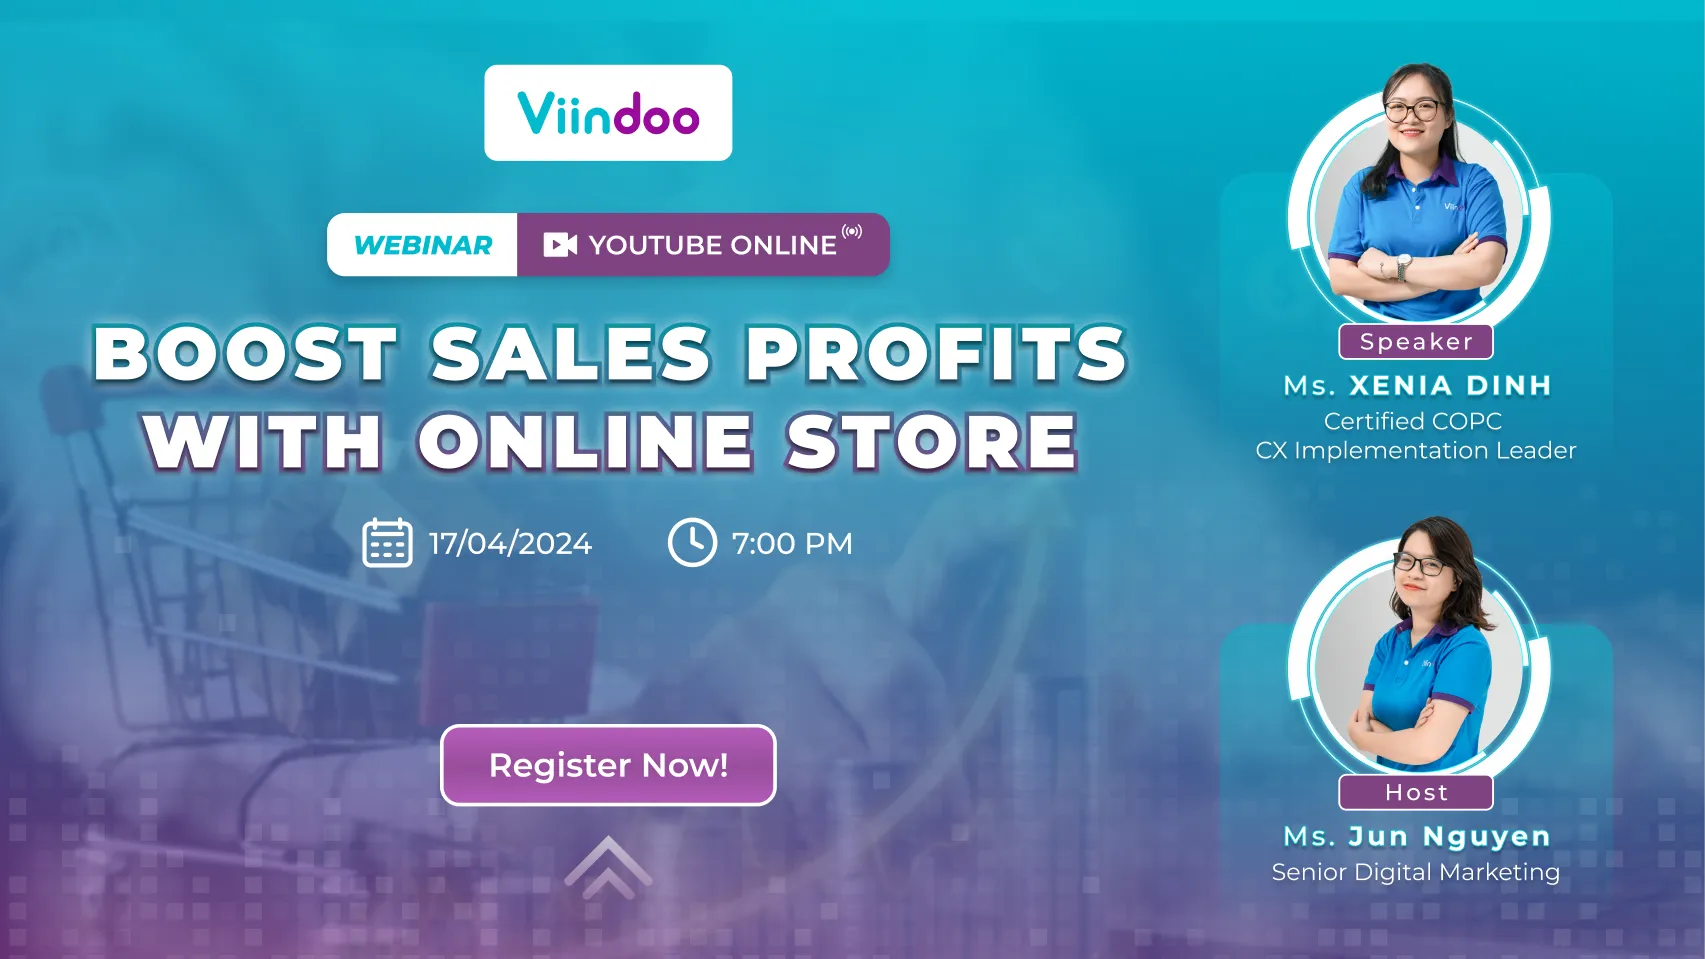 Viindoo Webinar Boost Sales Profits with Online Store